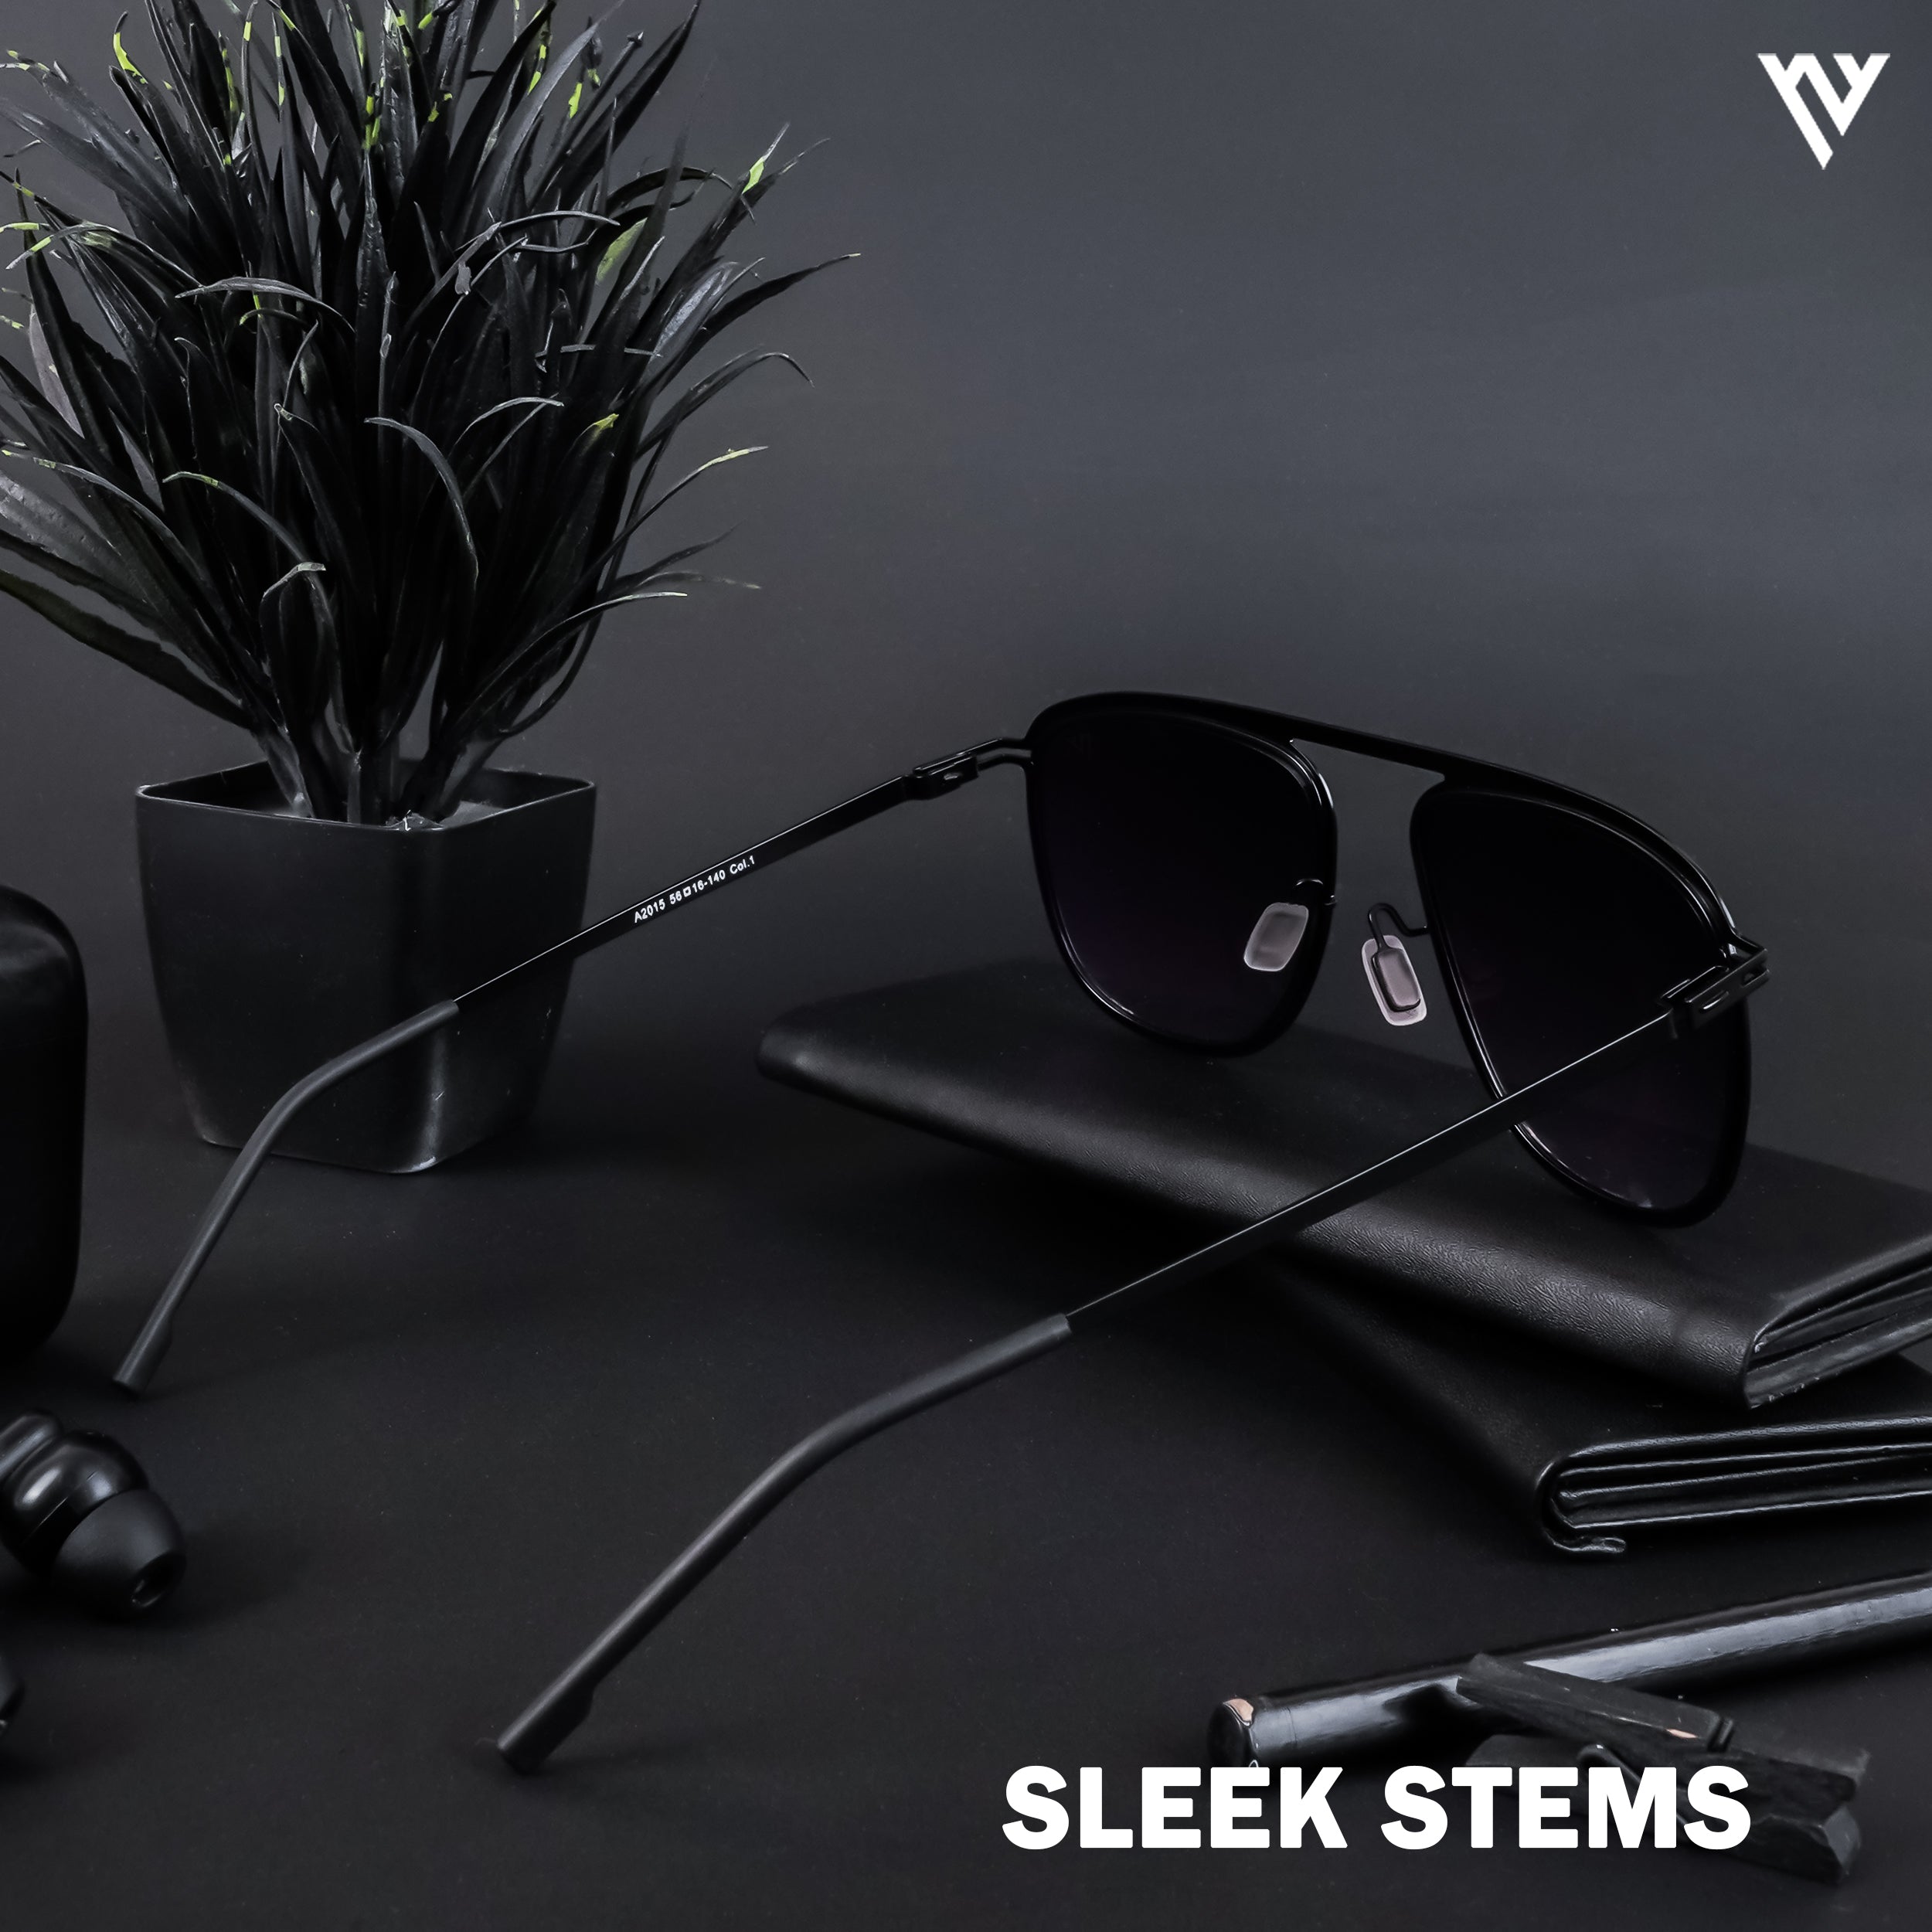 Voyage Exclusive Black & Silver Polarized Wayfarer Sunglasses for Men & Women - PMG4288